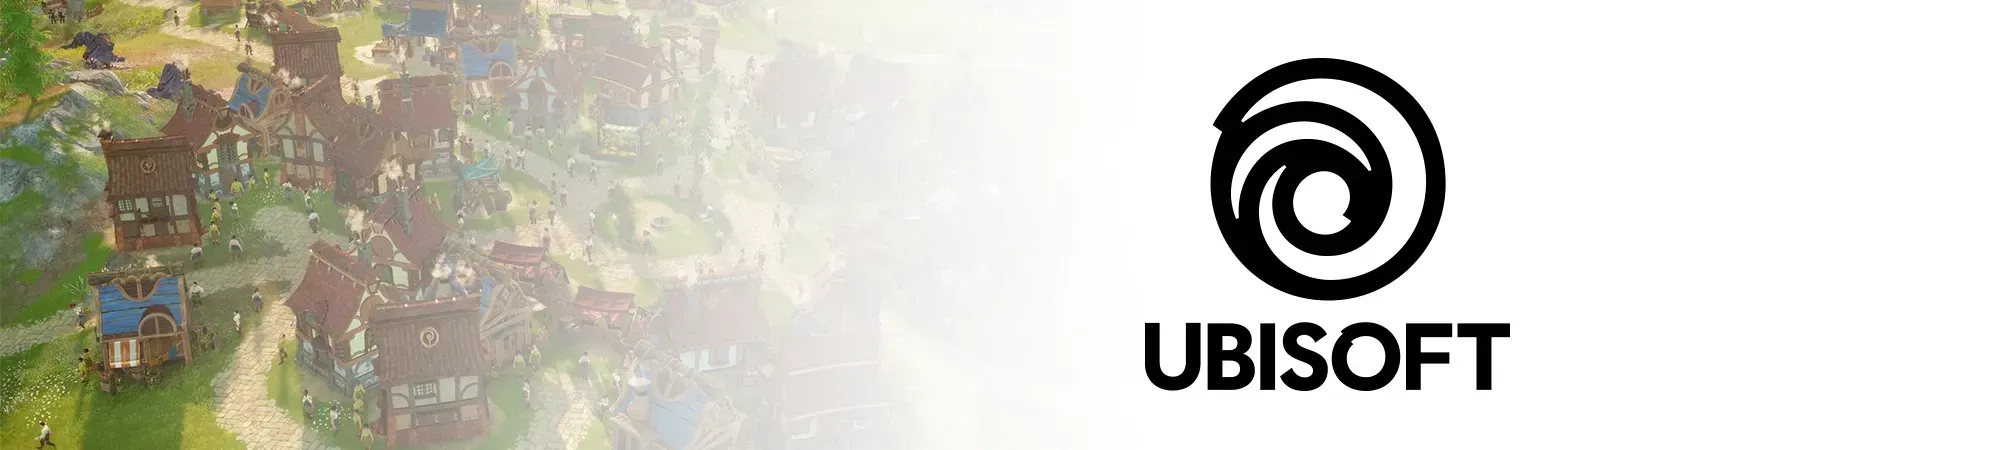 Ubisoft Blue Byte Banner